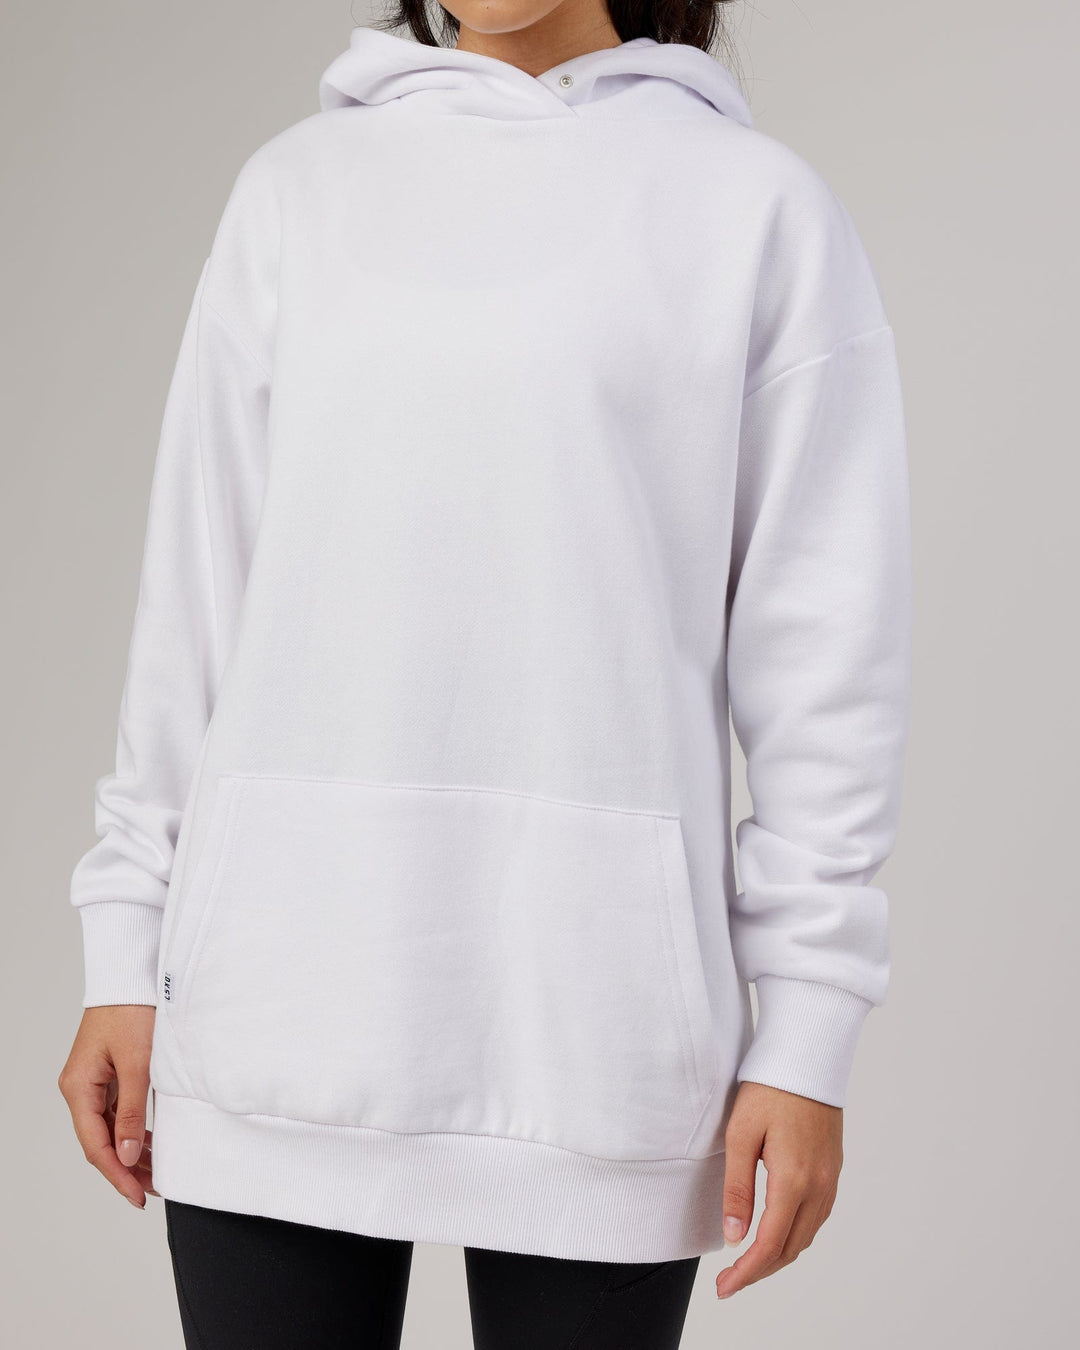 Woman wearing Unisex Linear Hoodie Oversize - White